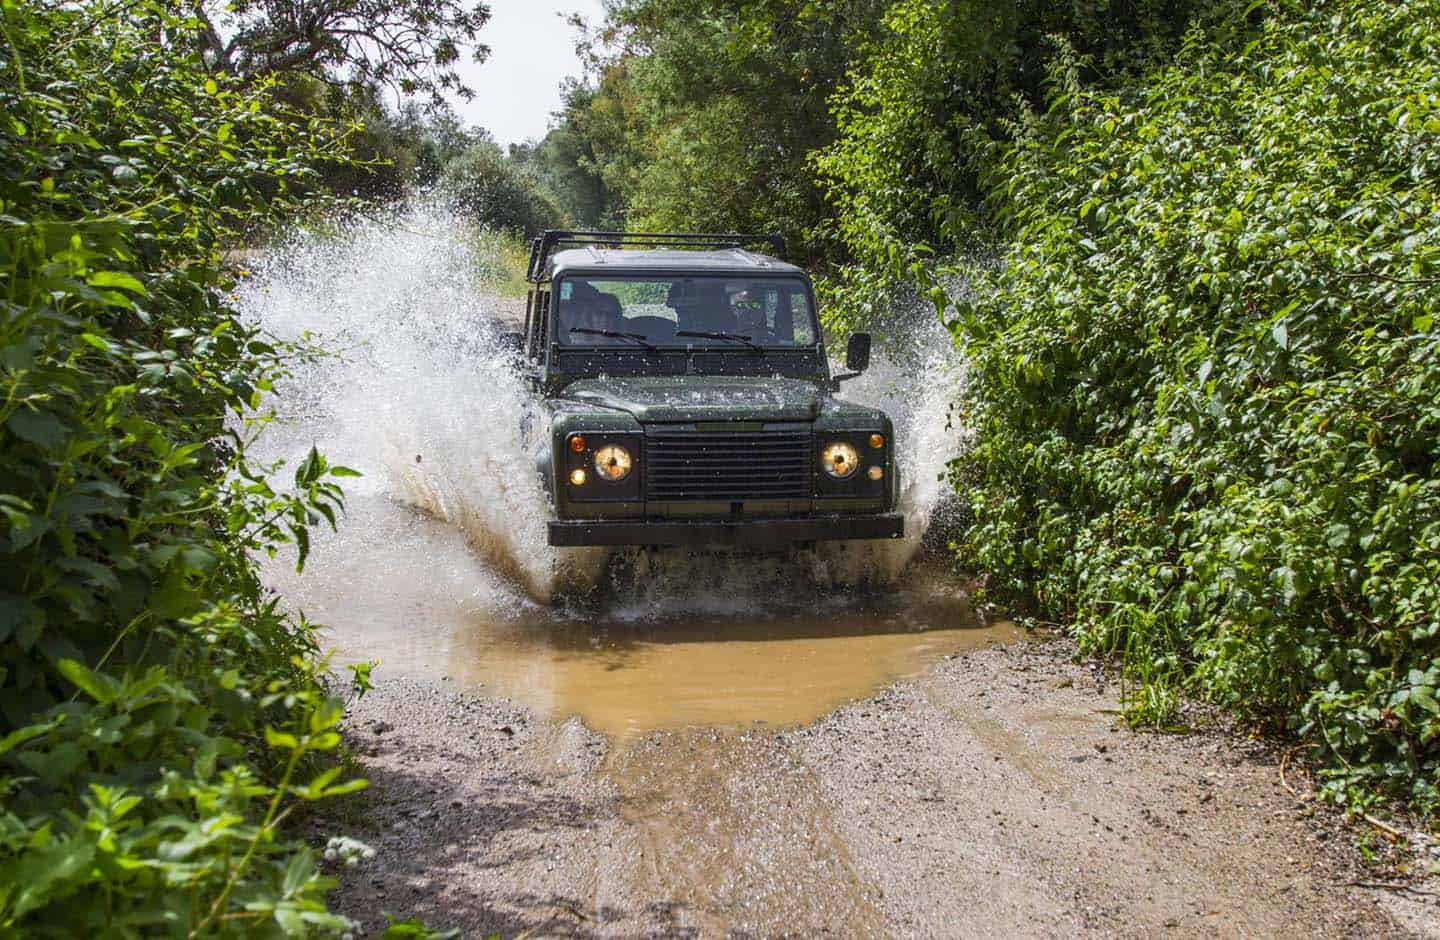 Jeep driving through a puddle on a safari tour